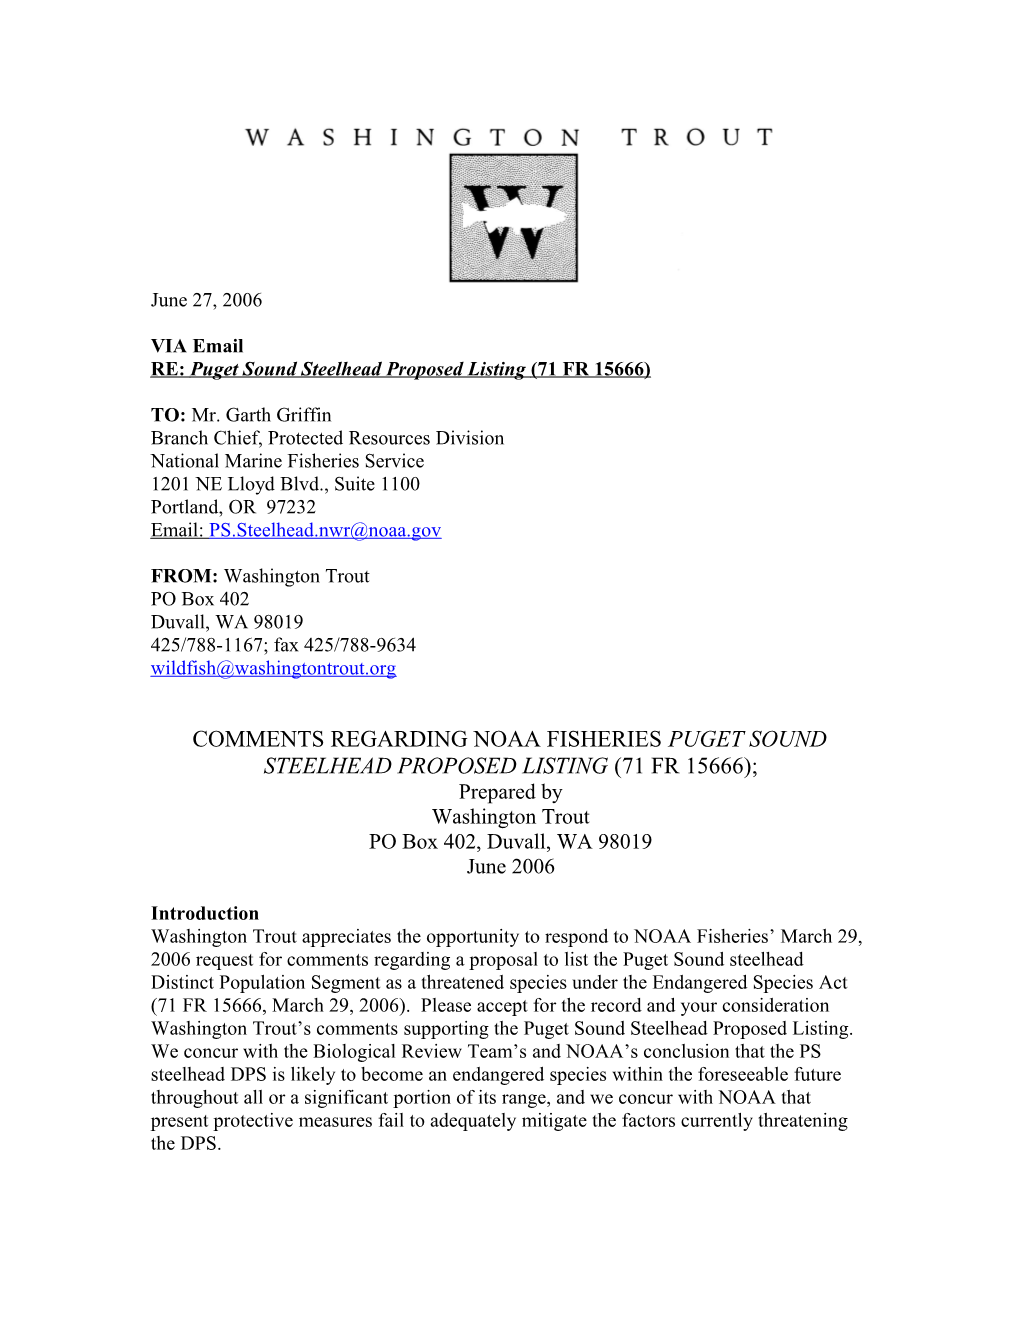 RE: Puget Sound Steelhead Proposed Listing (71 FR 15666)